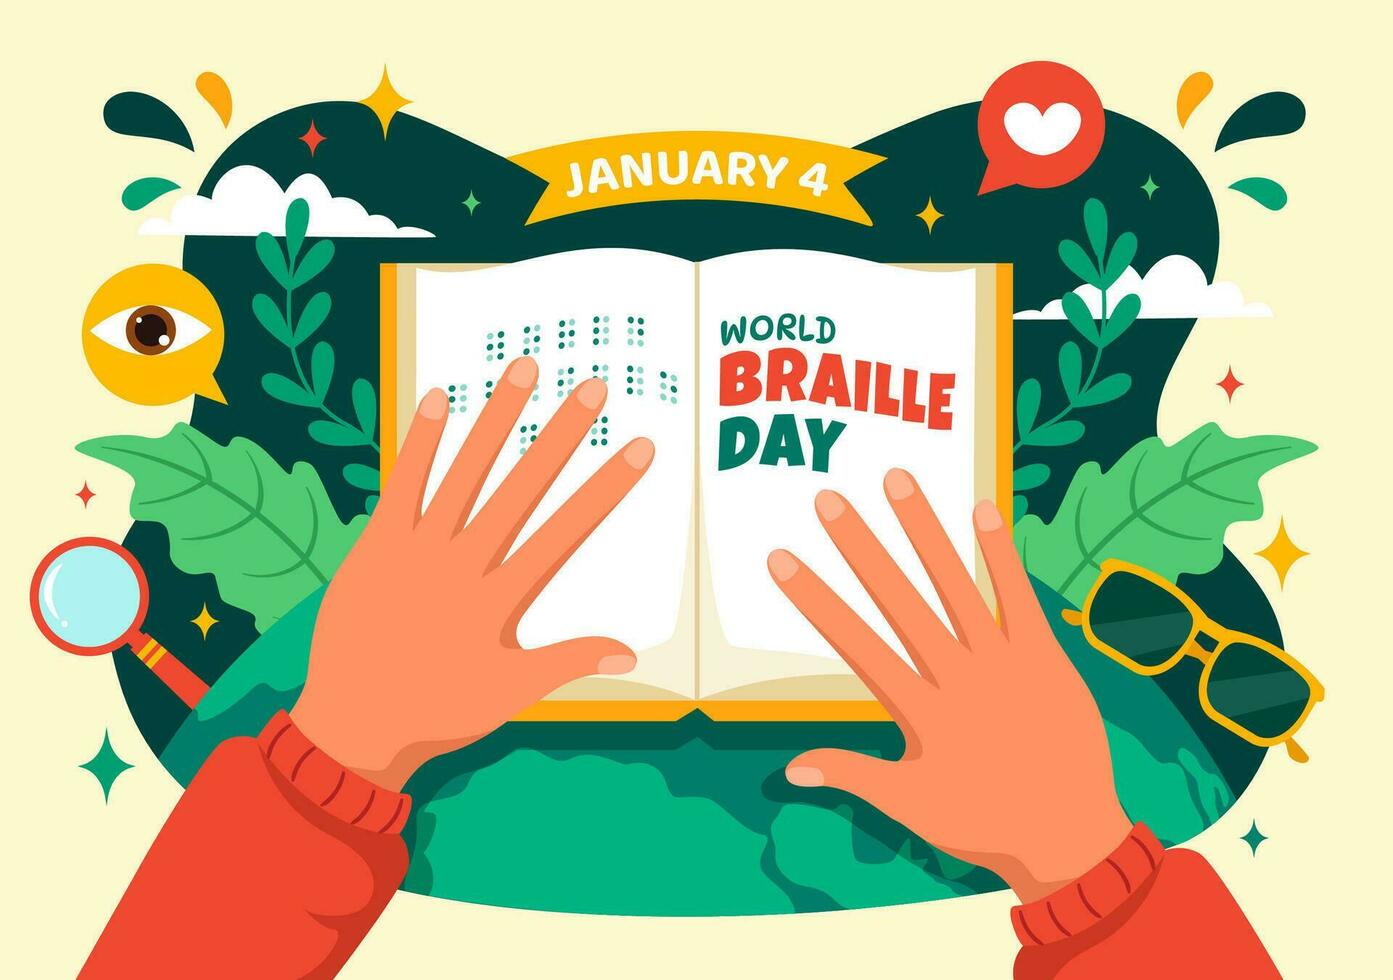 mundo braille día vector ilustración en 4to de enero con texto por alfabeto para medio de comunicación en plano niños dibujos animados antecedentes diseño